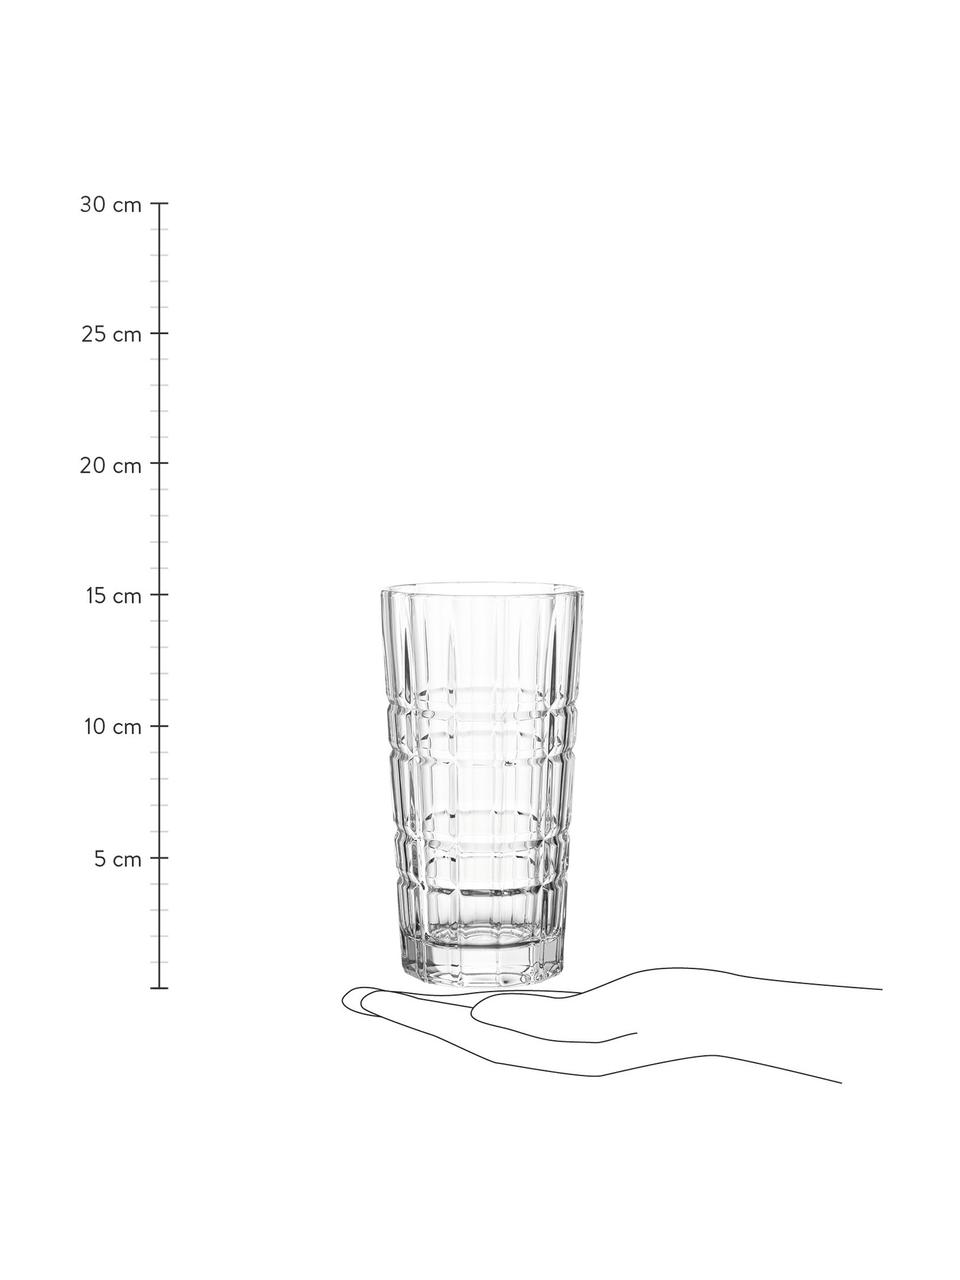 Bicchiere acqua Spiritii 4 pz, Vetro, Trasparente, Ø 8 x Alt. 15 cm, 400 ml